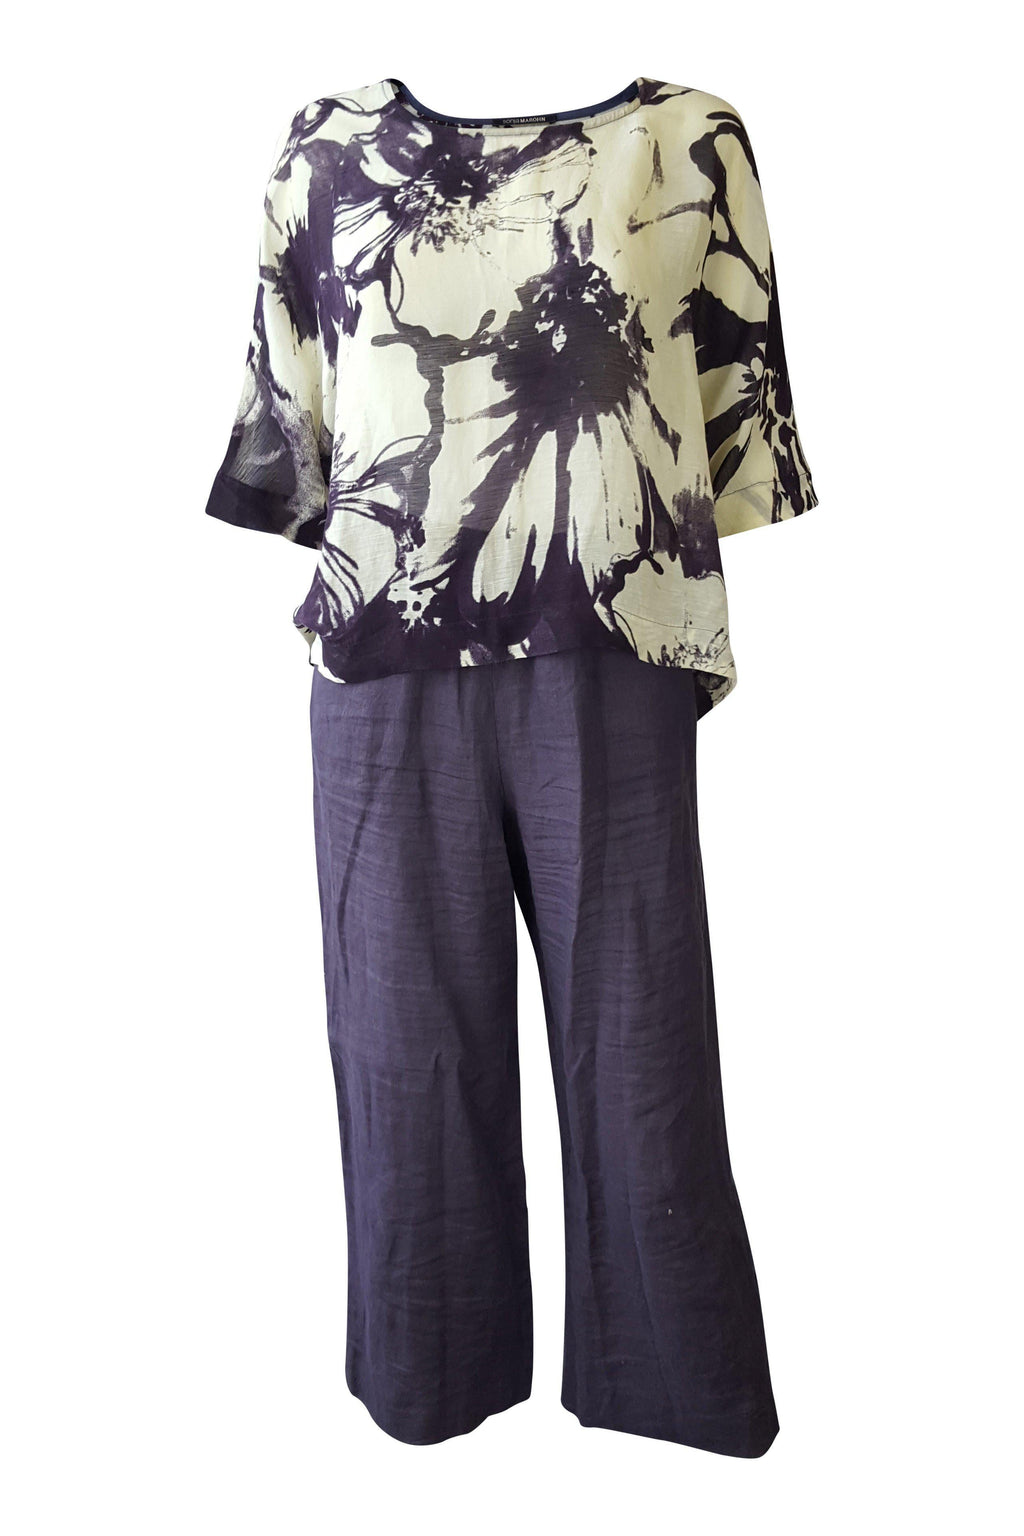 SONJA MAROHN Cotton Blend Purple Cream Top Trousers Set (10)-Sonja Marohn-The Freperie